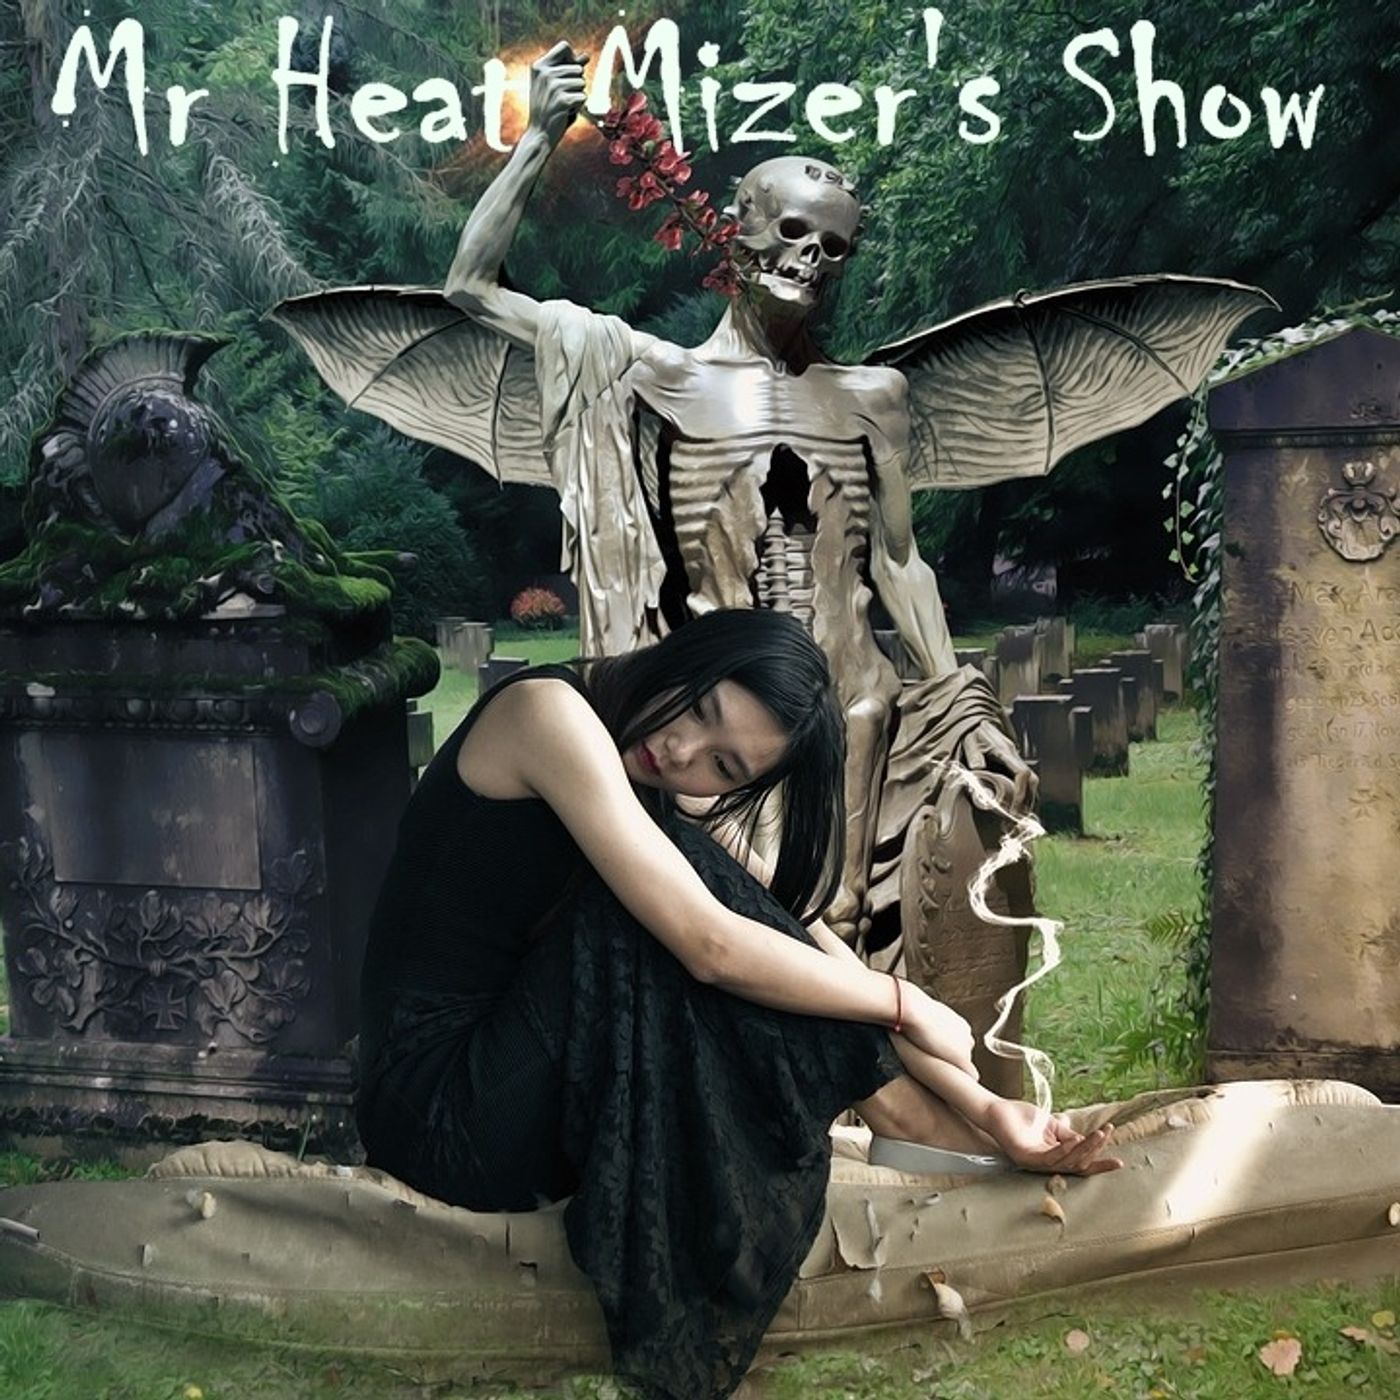 The Mr Heat Mizer show